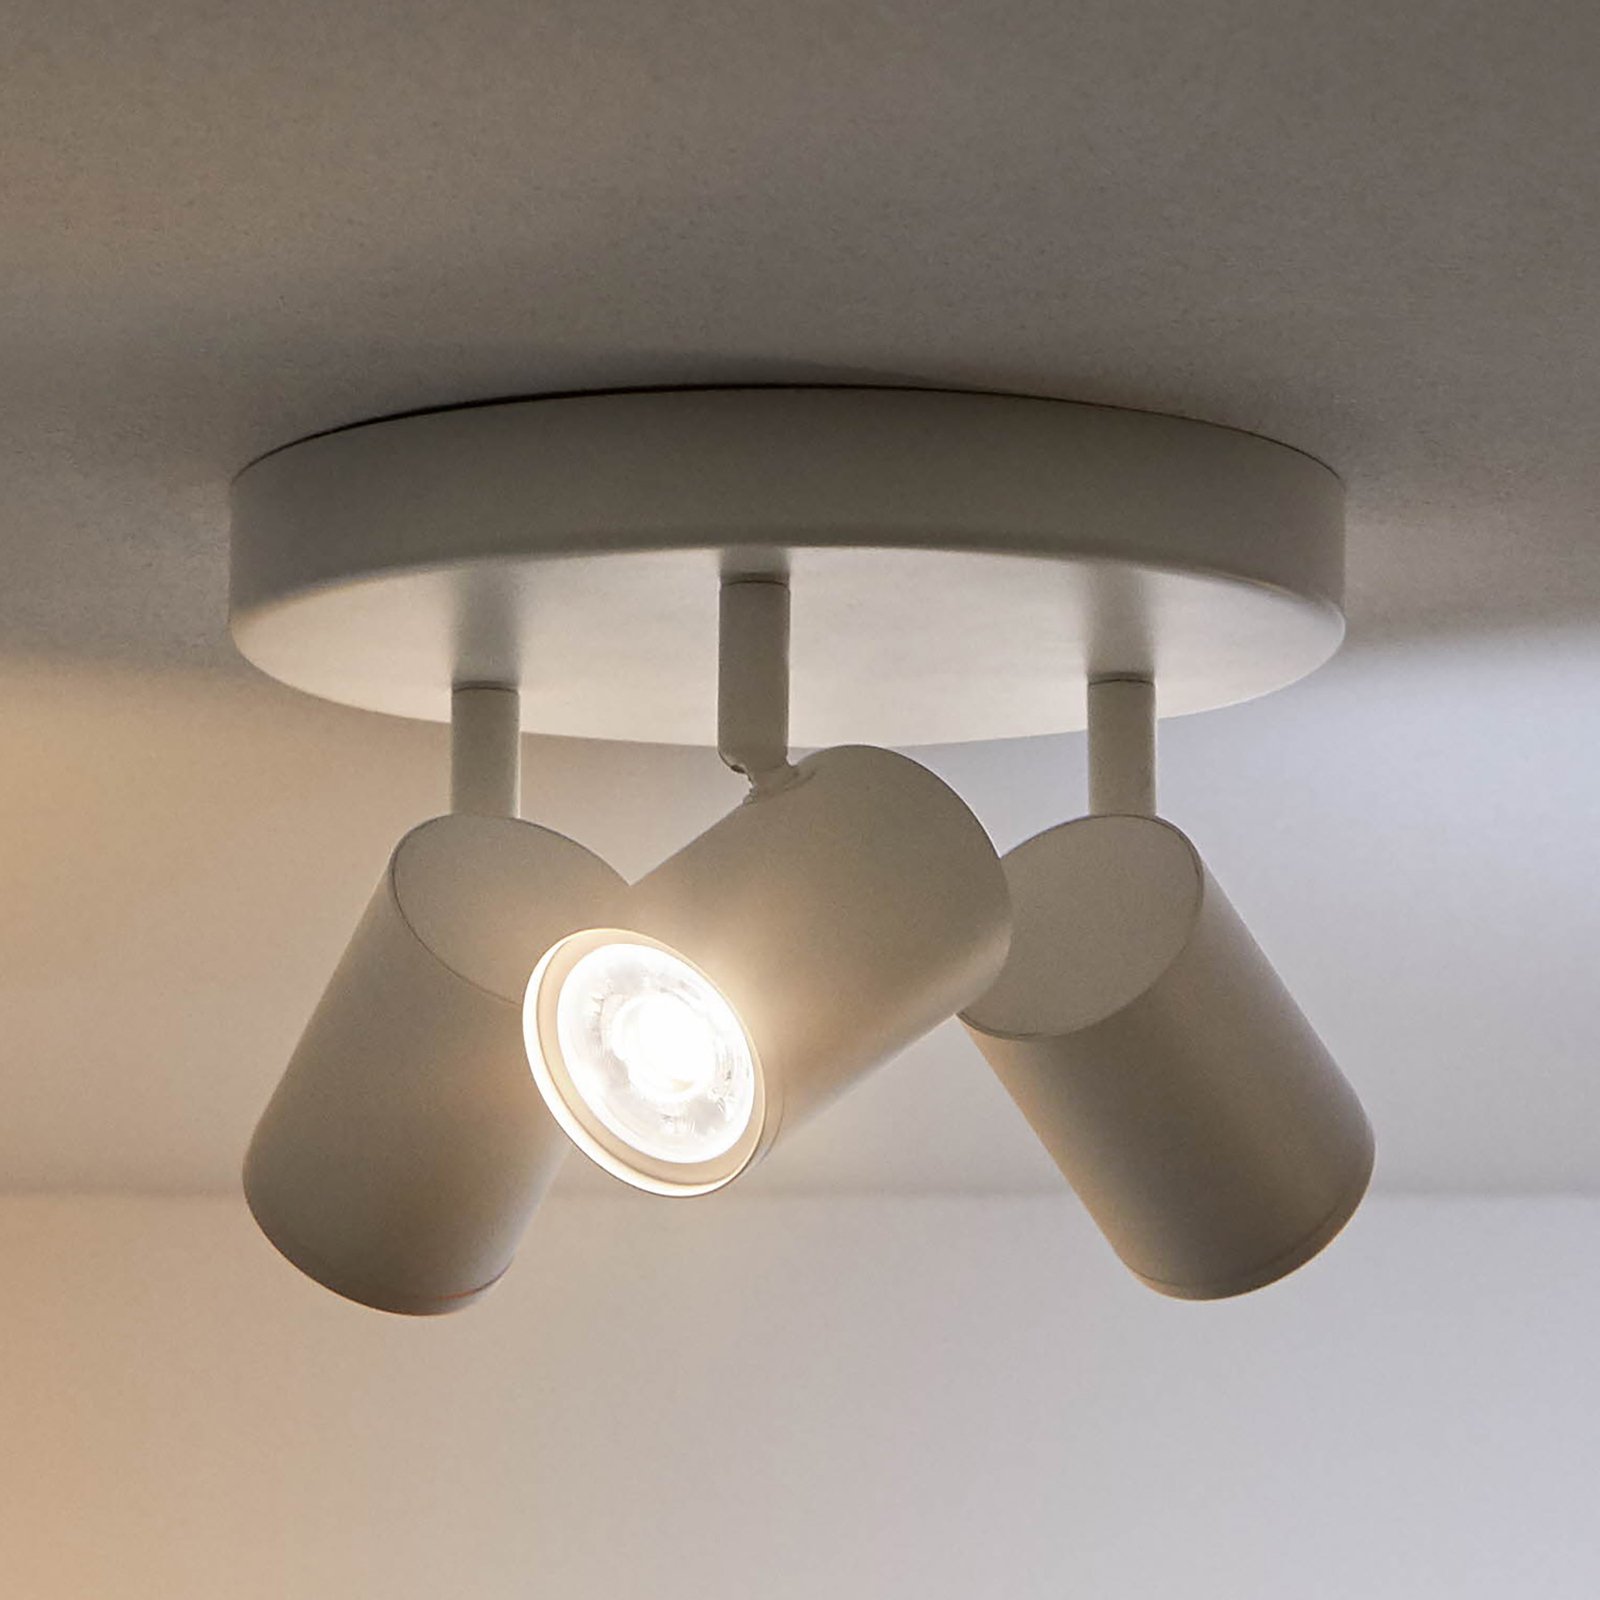 WiZ spot plafond LED Imageo, 3 lampes rond, blanc